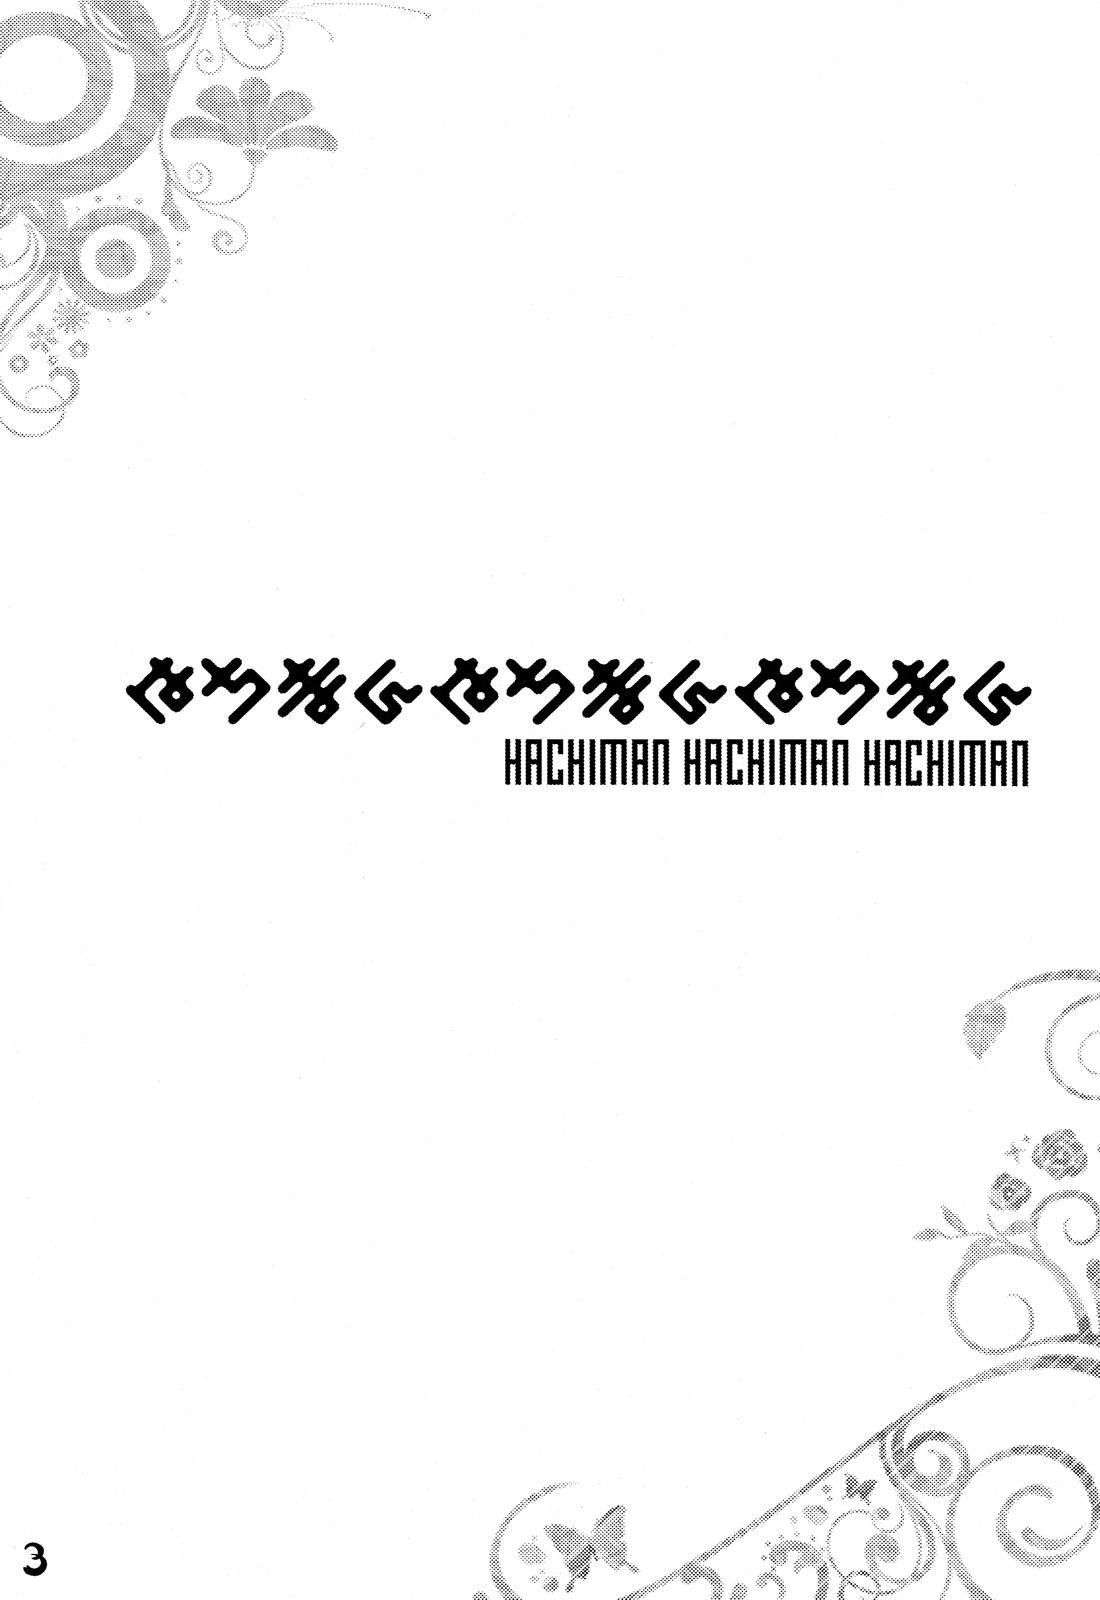 Blacks Hachiman Hachiman Hachiman! - Yahari ore no seishun love come wa machigatteiru Class - Page 3